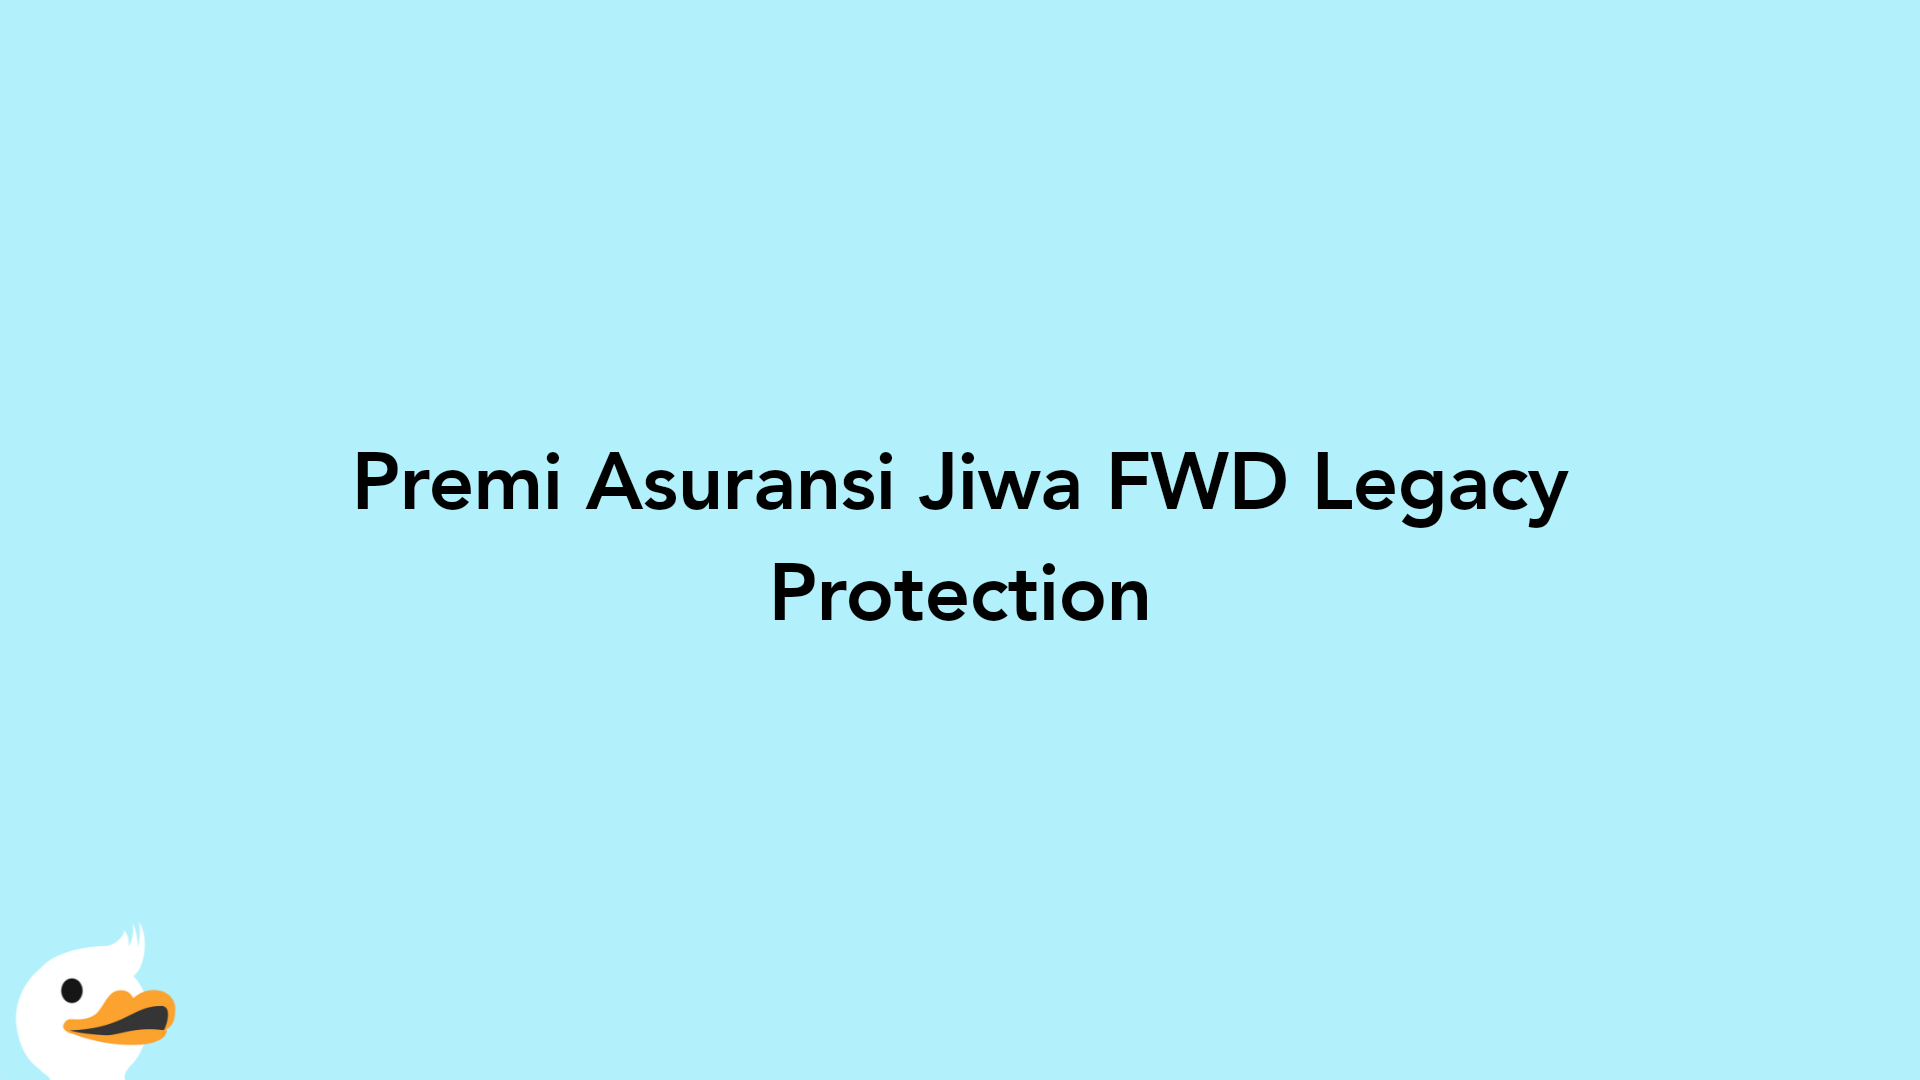 Premi Asuransi Jiwa FWD Legacy Protection